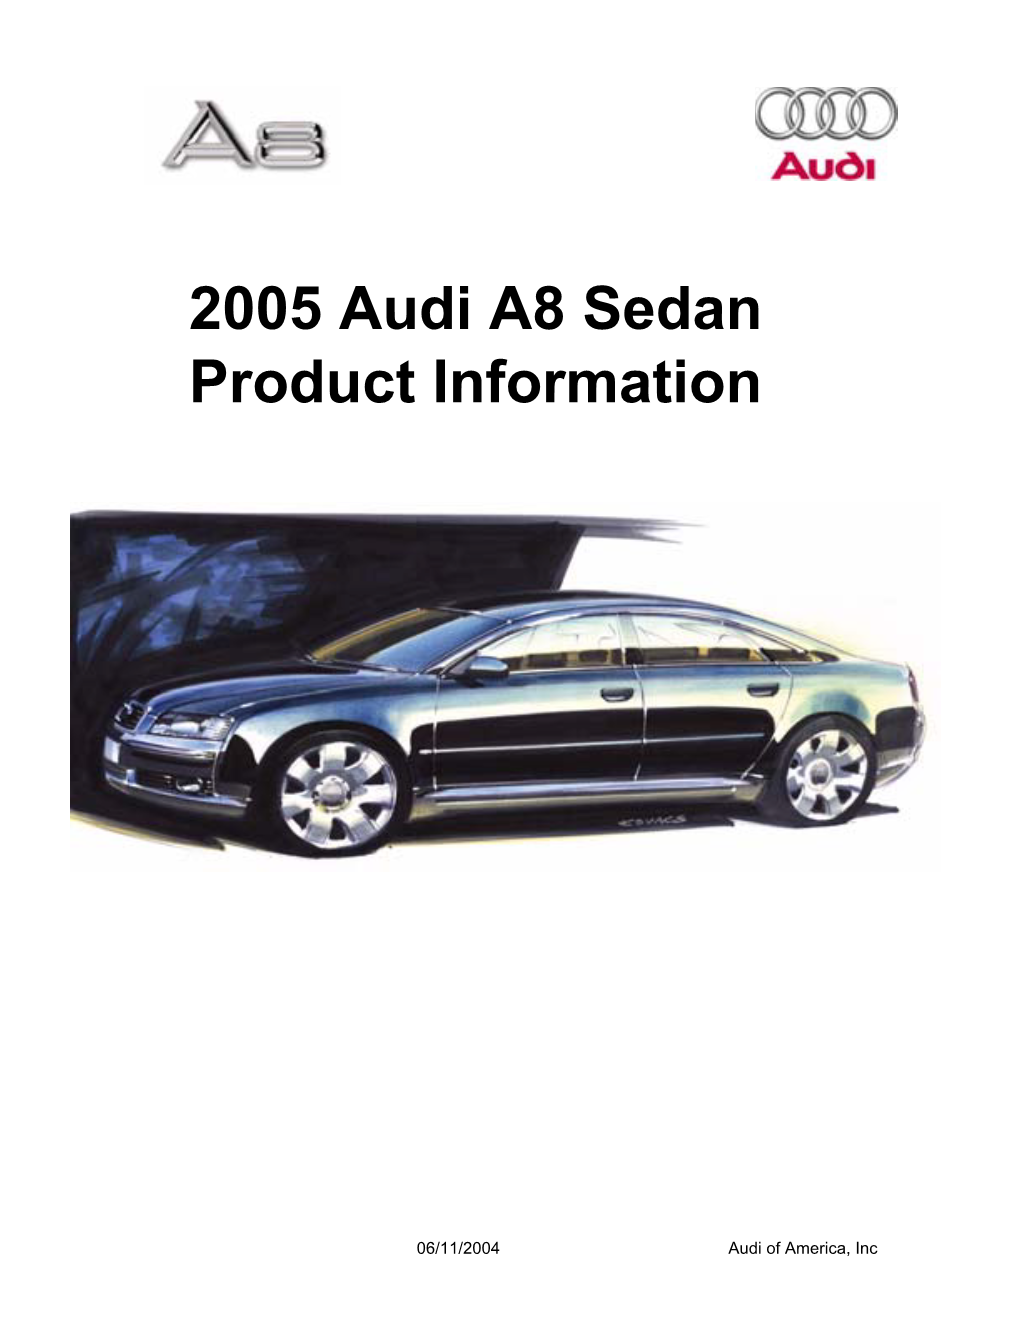 2005 Audi A8 Sedan Product Information